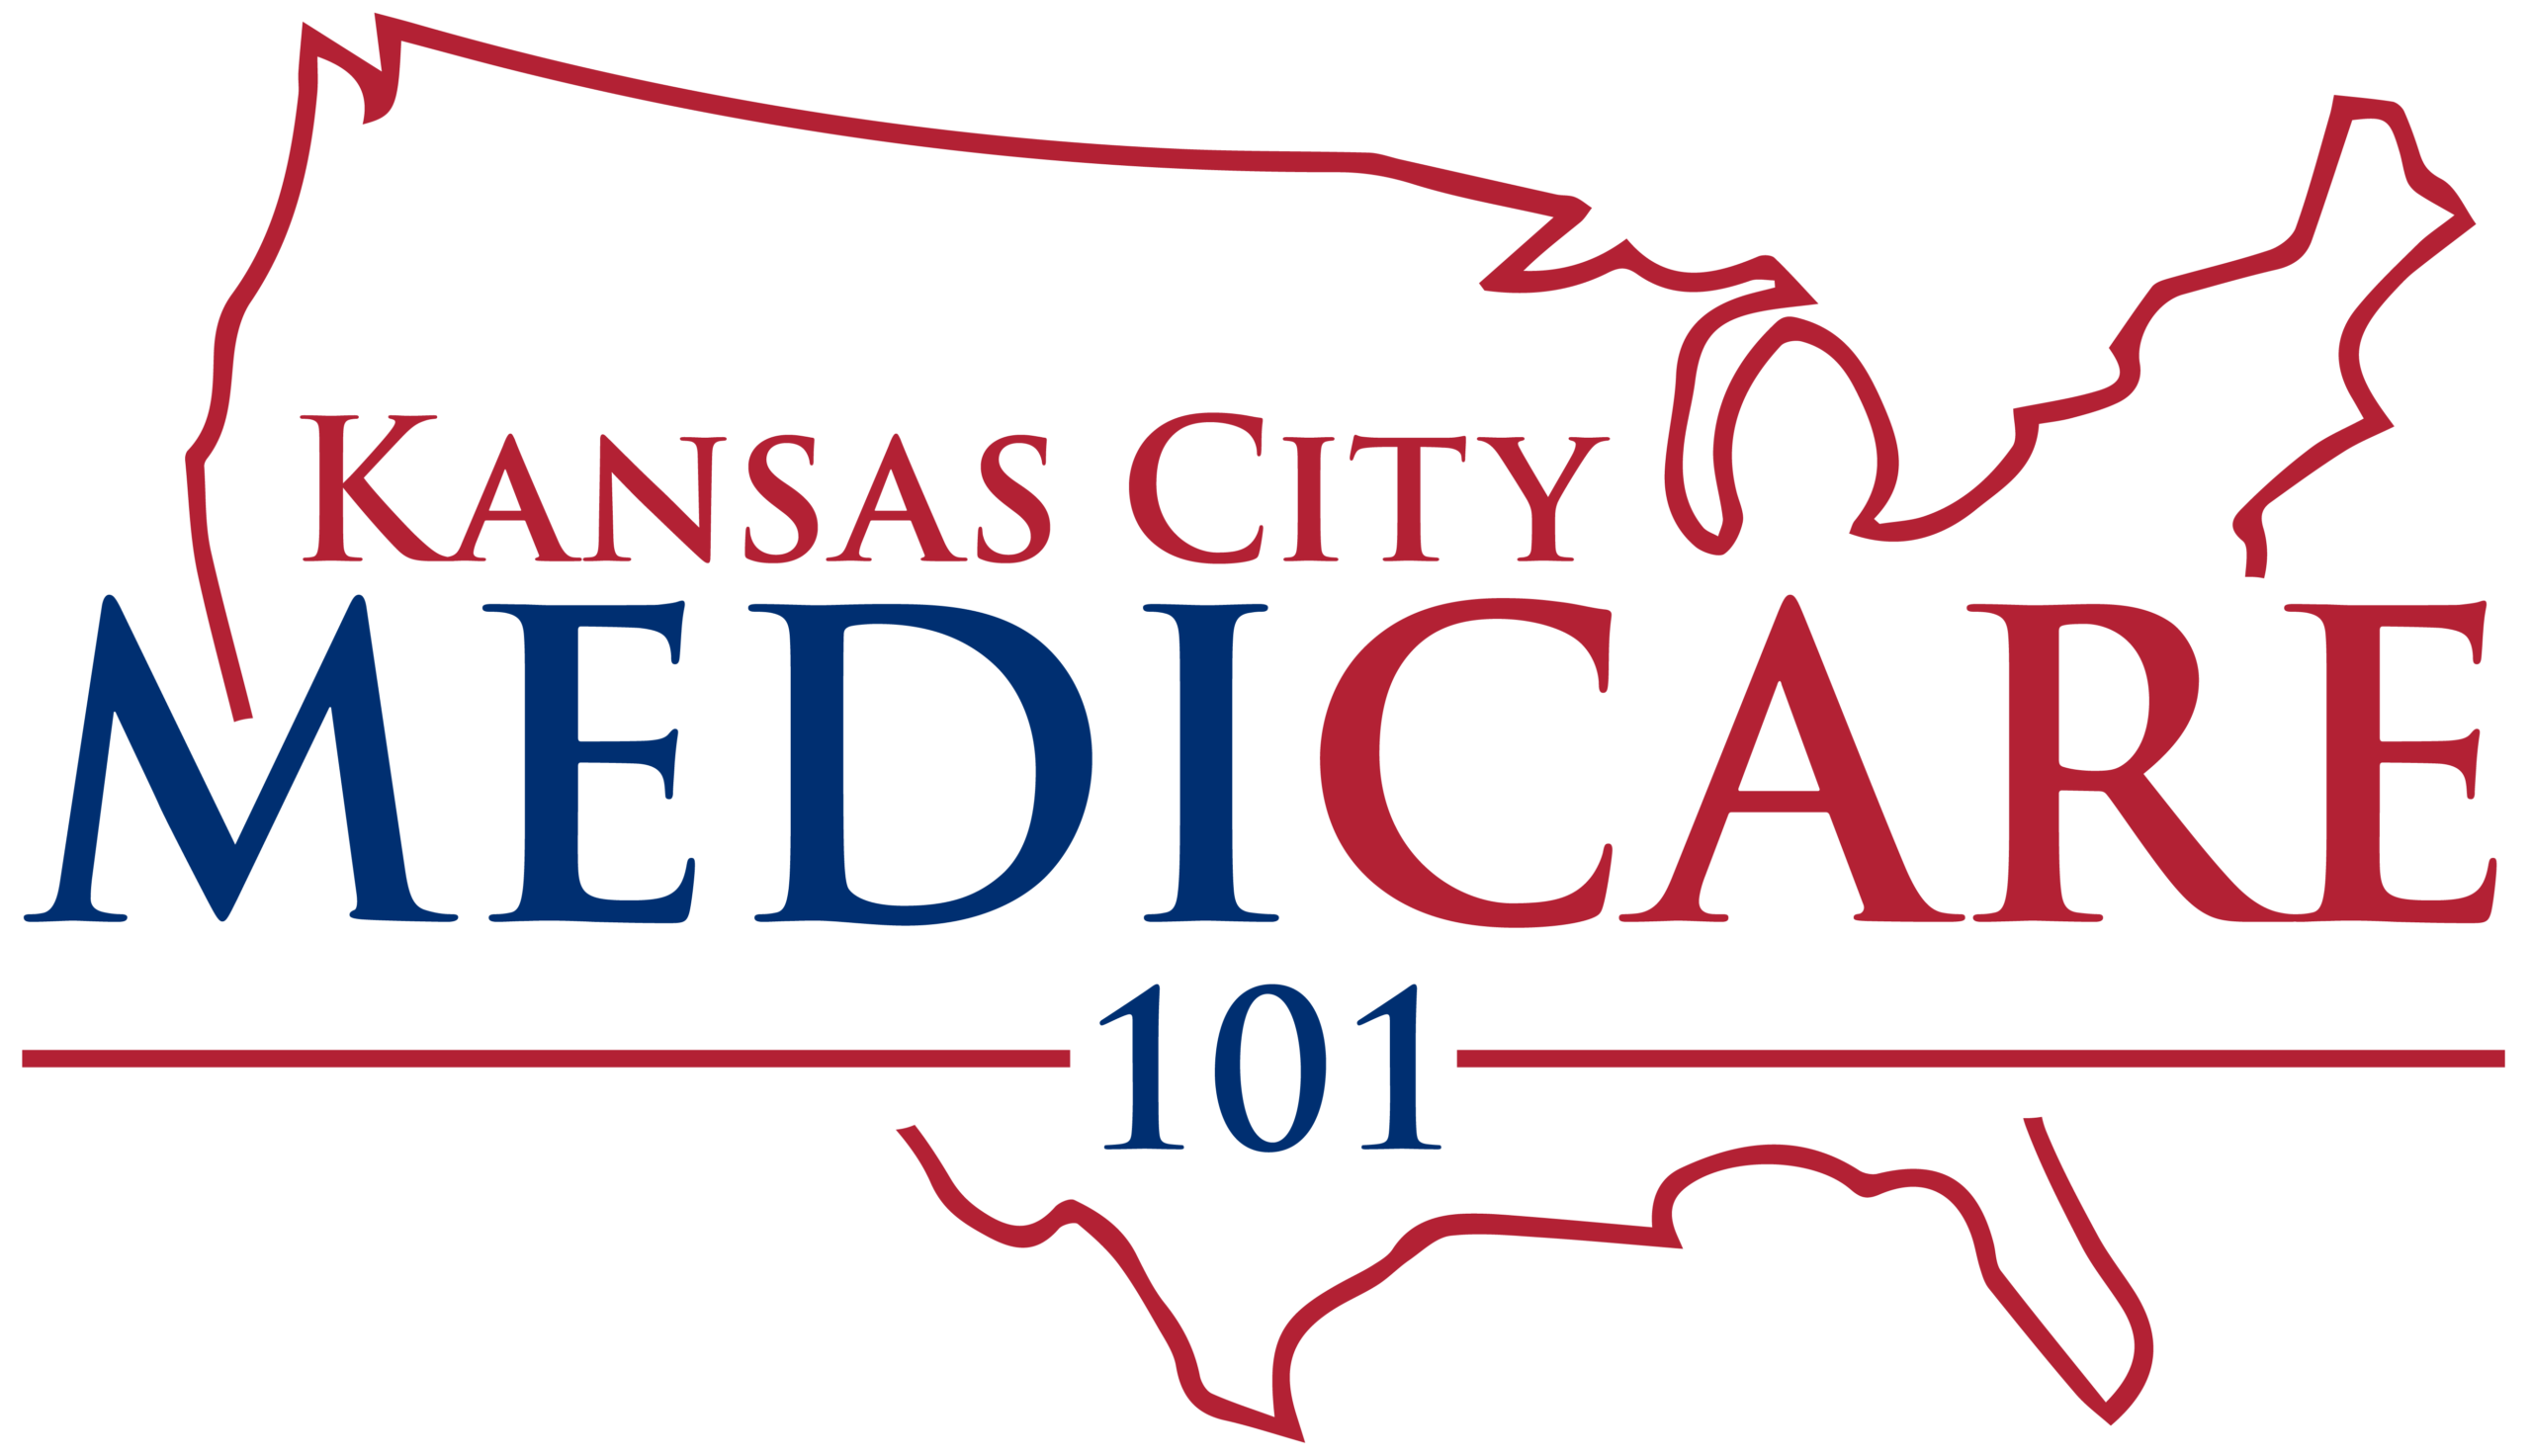 KansasCityMedicare101Logo-2.png